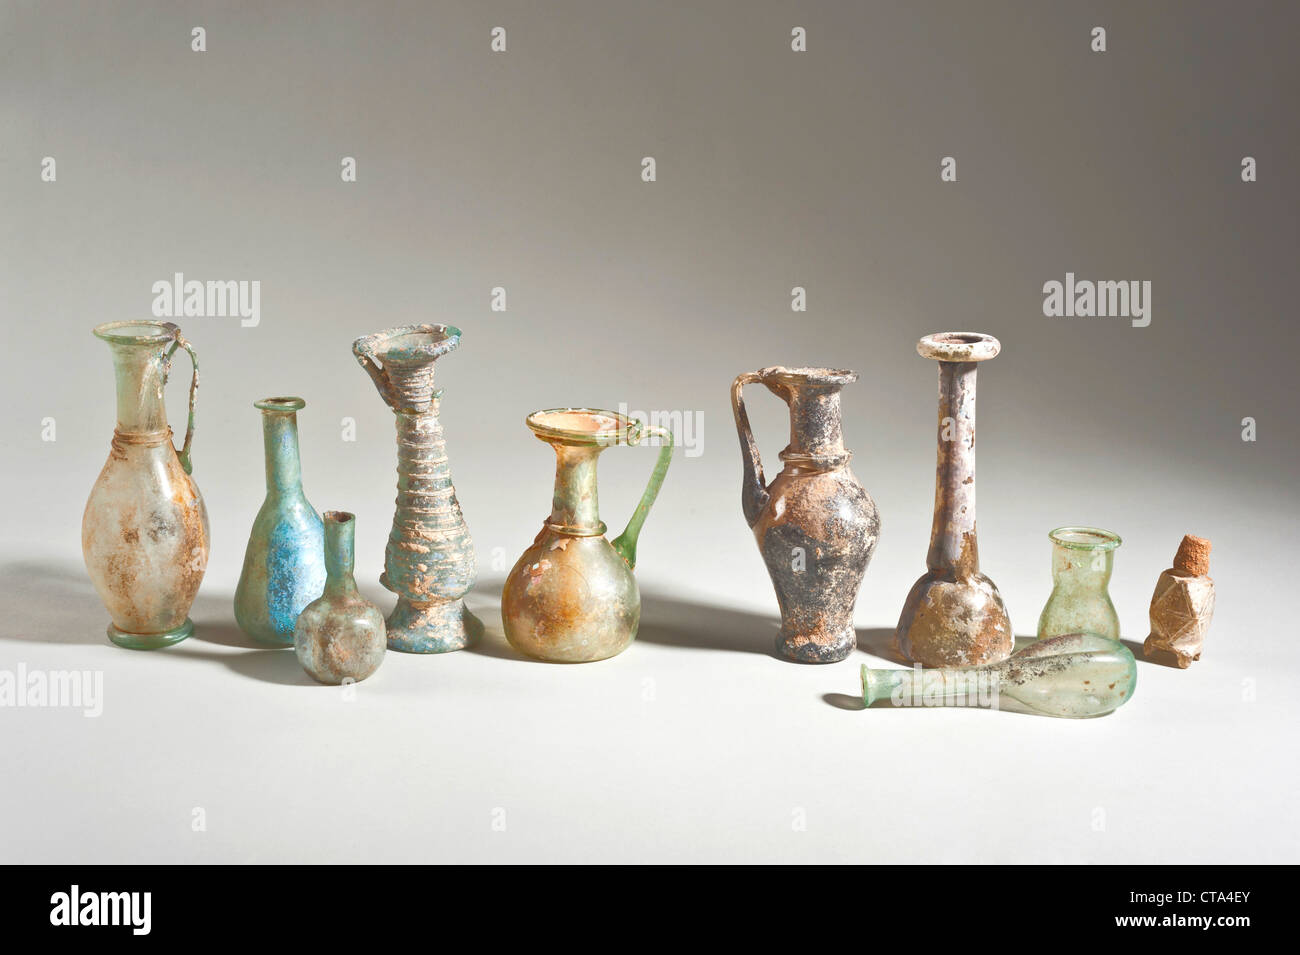 Roman and Islamic period glass bottles Stock Photo